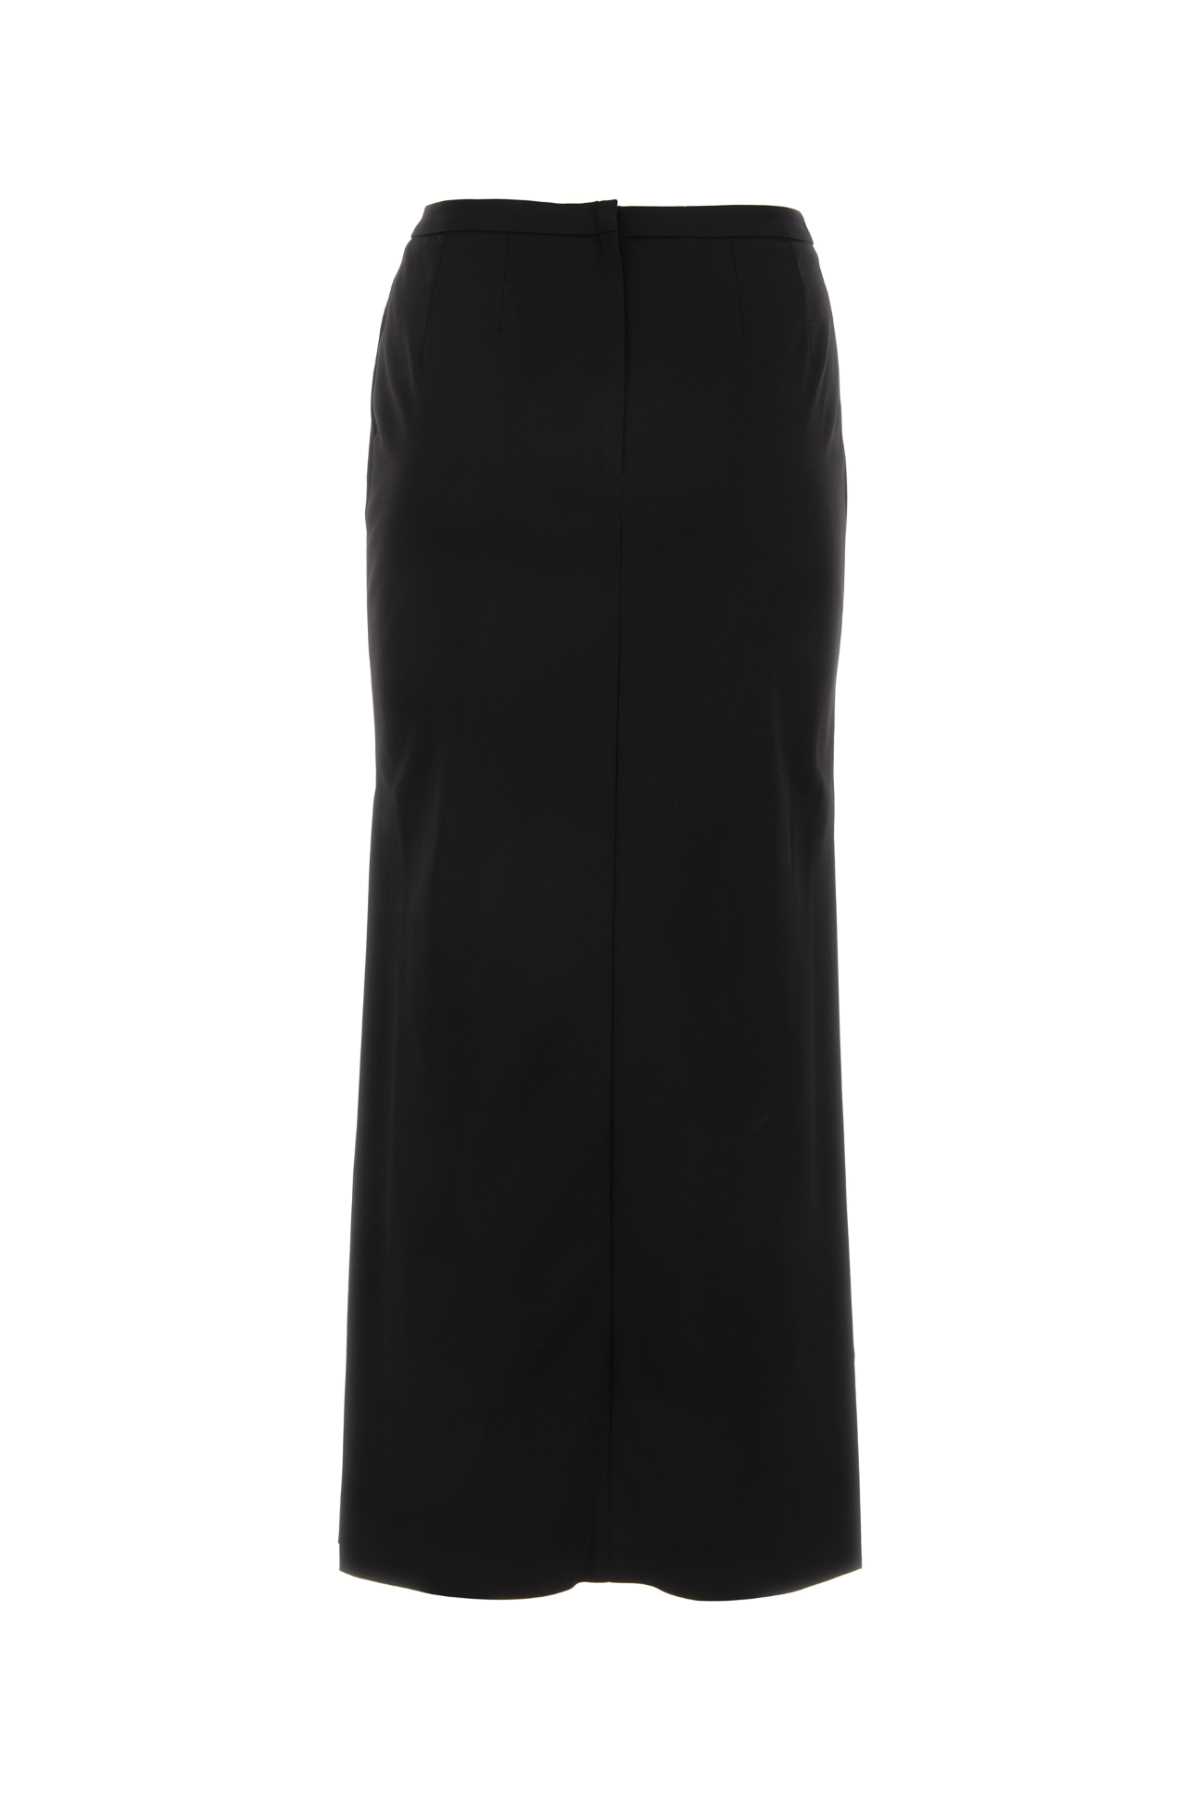 Dolce & Gabbana Black Cady Skirt In Nero